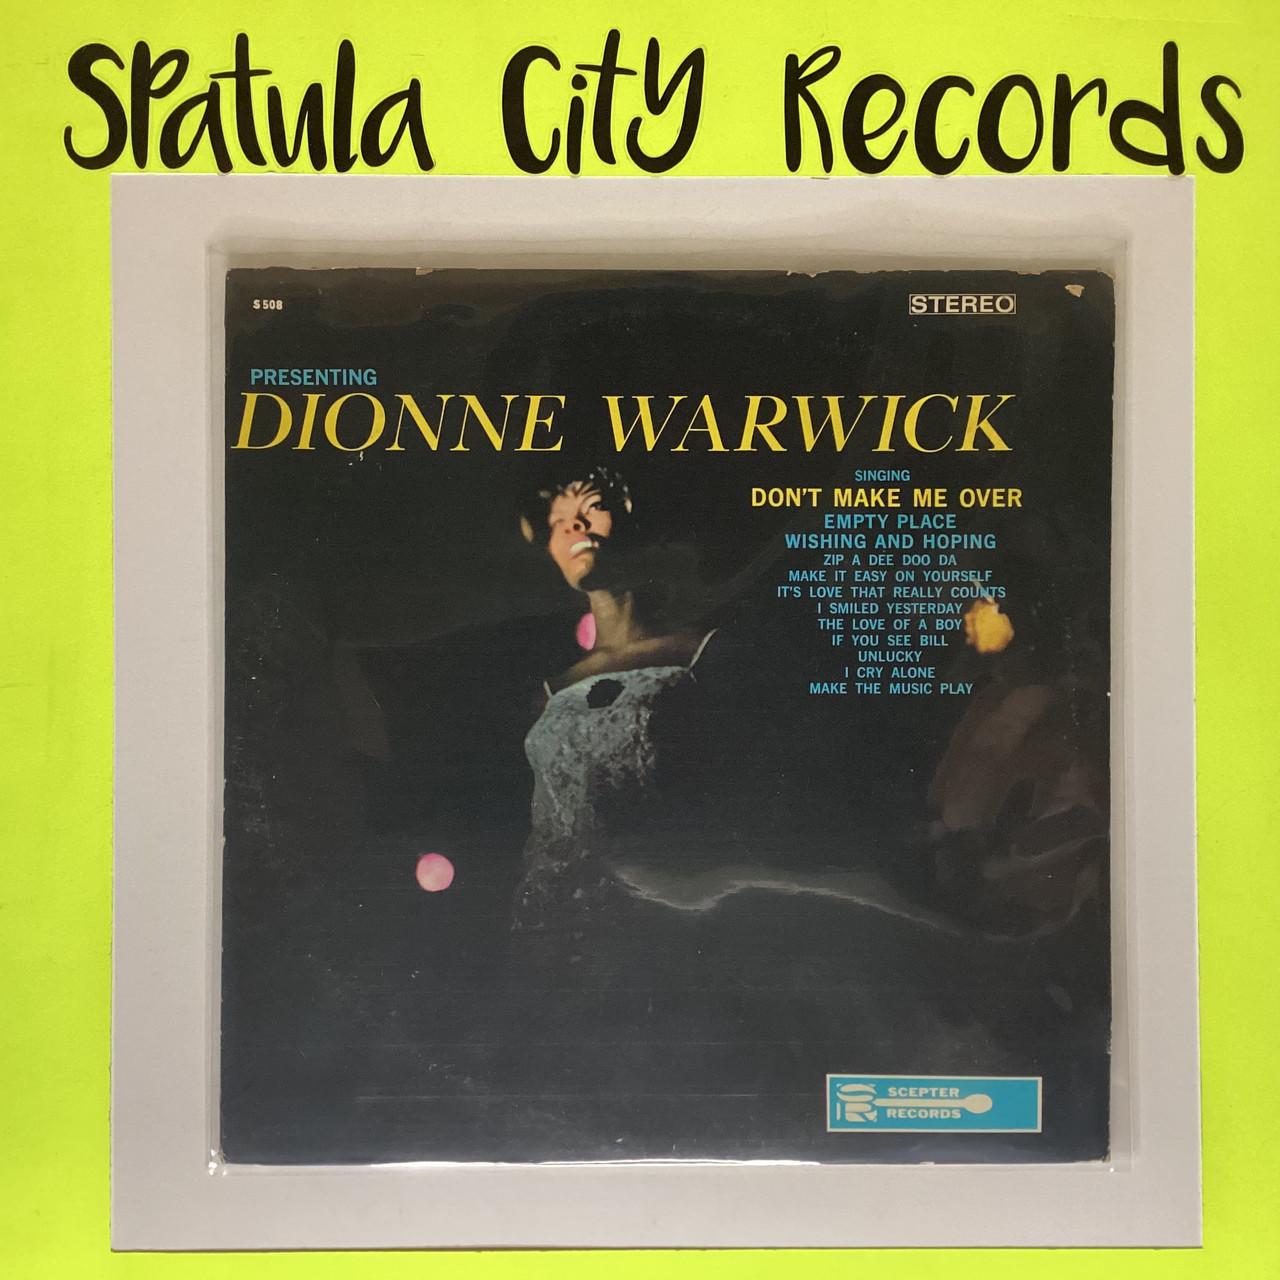 Dionne Warwick - Presenting Dionne Warwick - MONO - vinyl record album LP